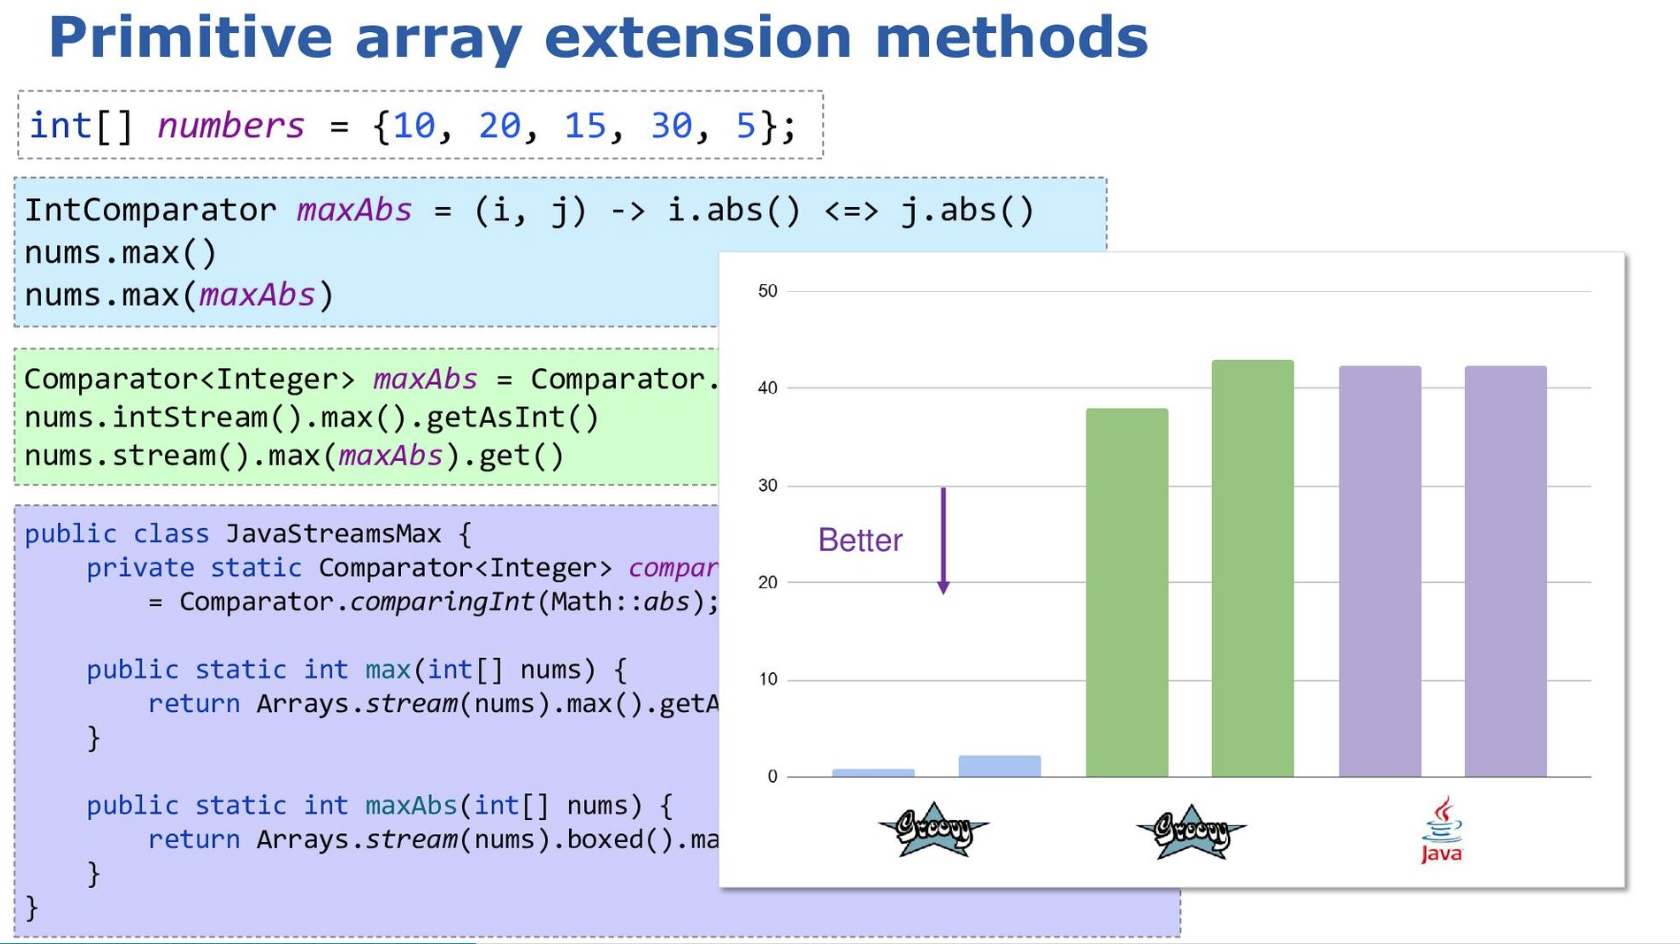 performance of primitive int array extension methods